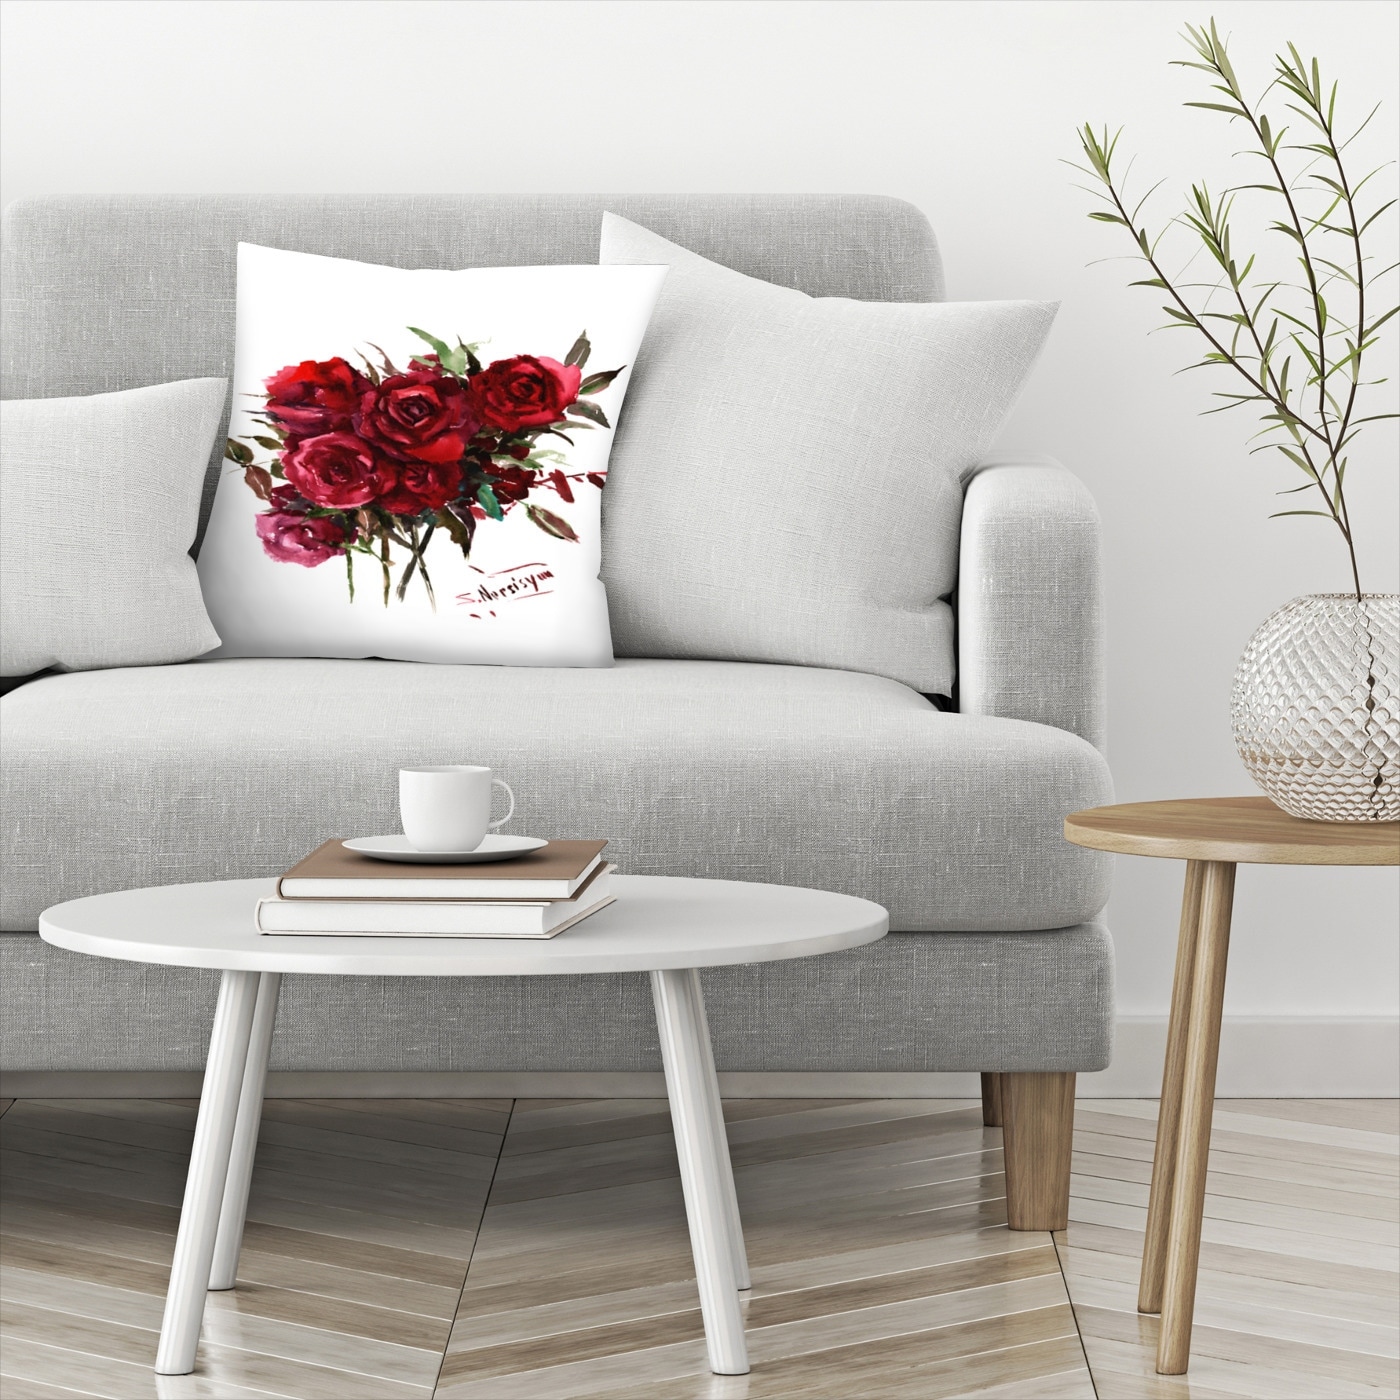 Deep Red Burgundy Roses - Decorative Throw Pillow